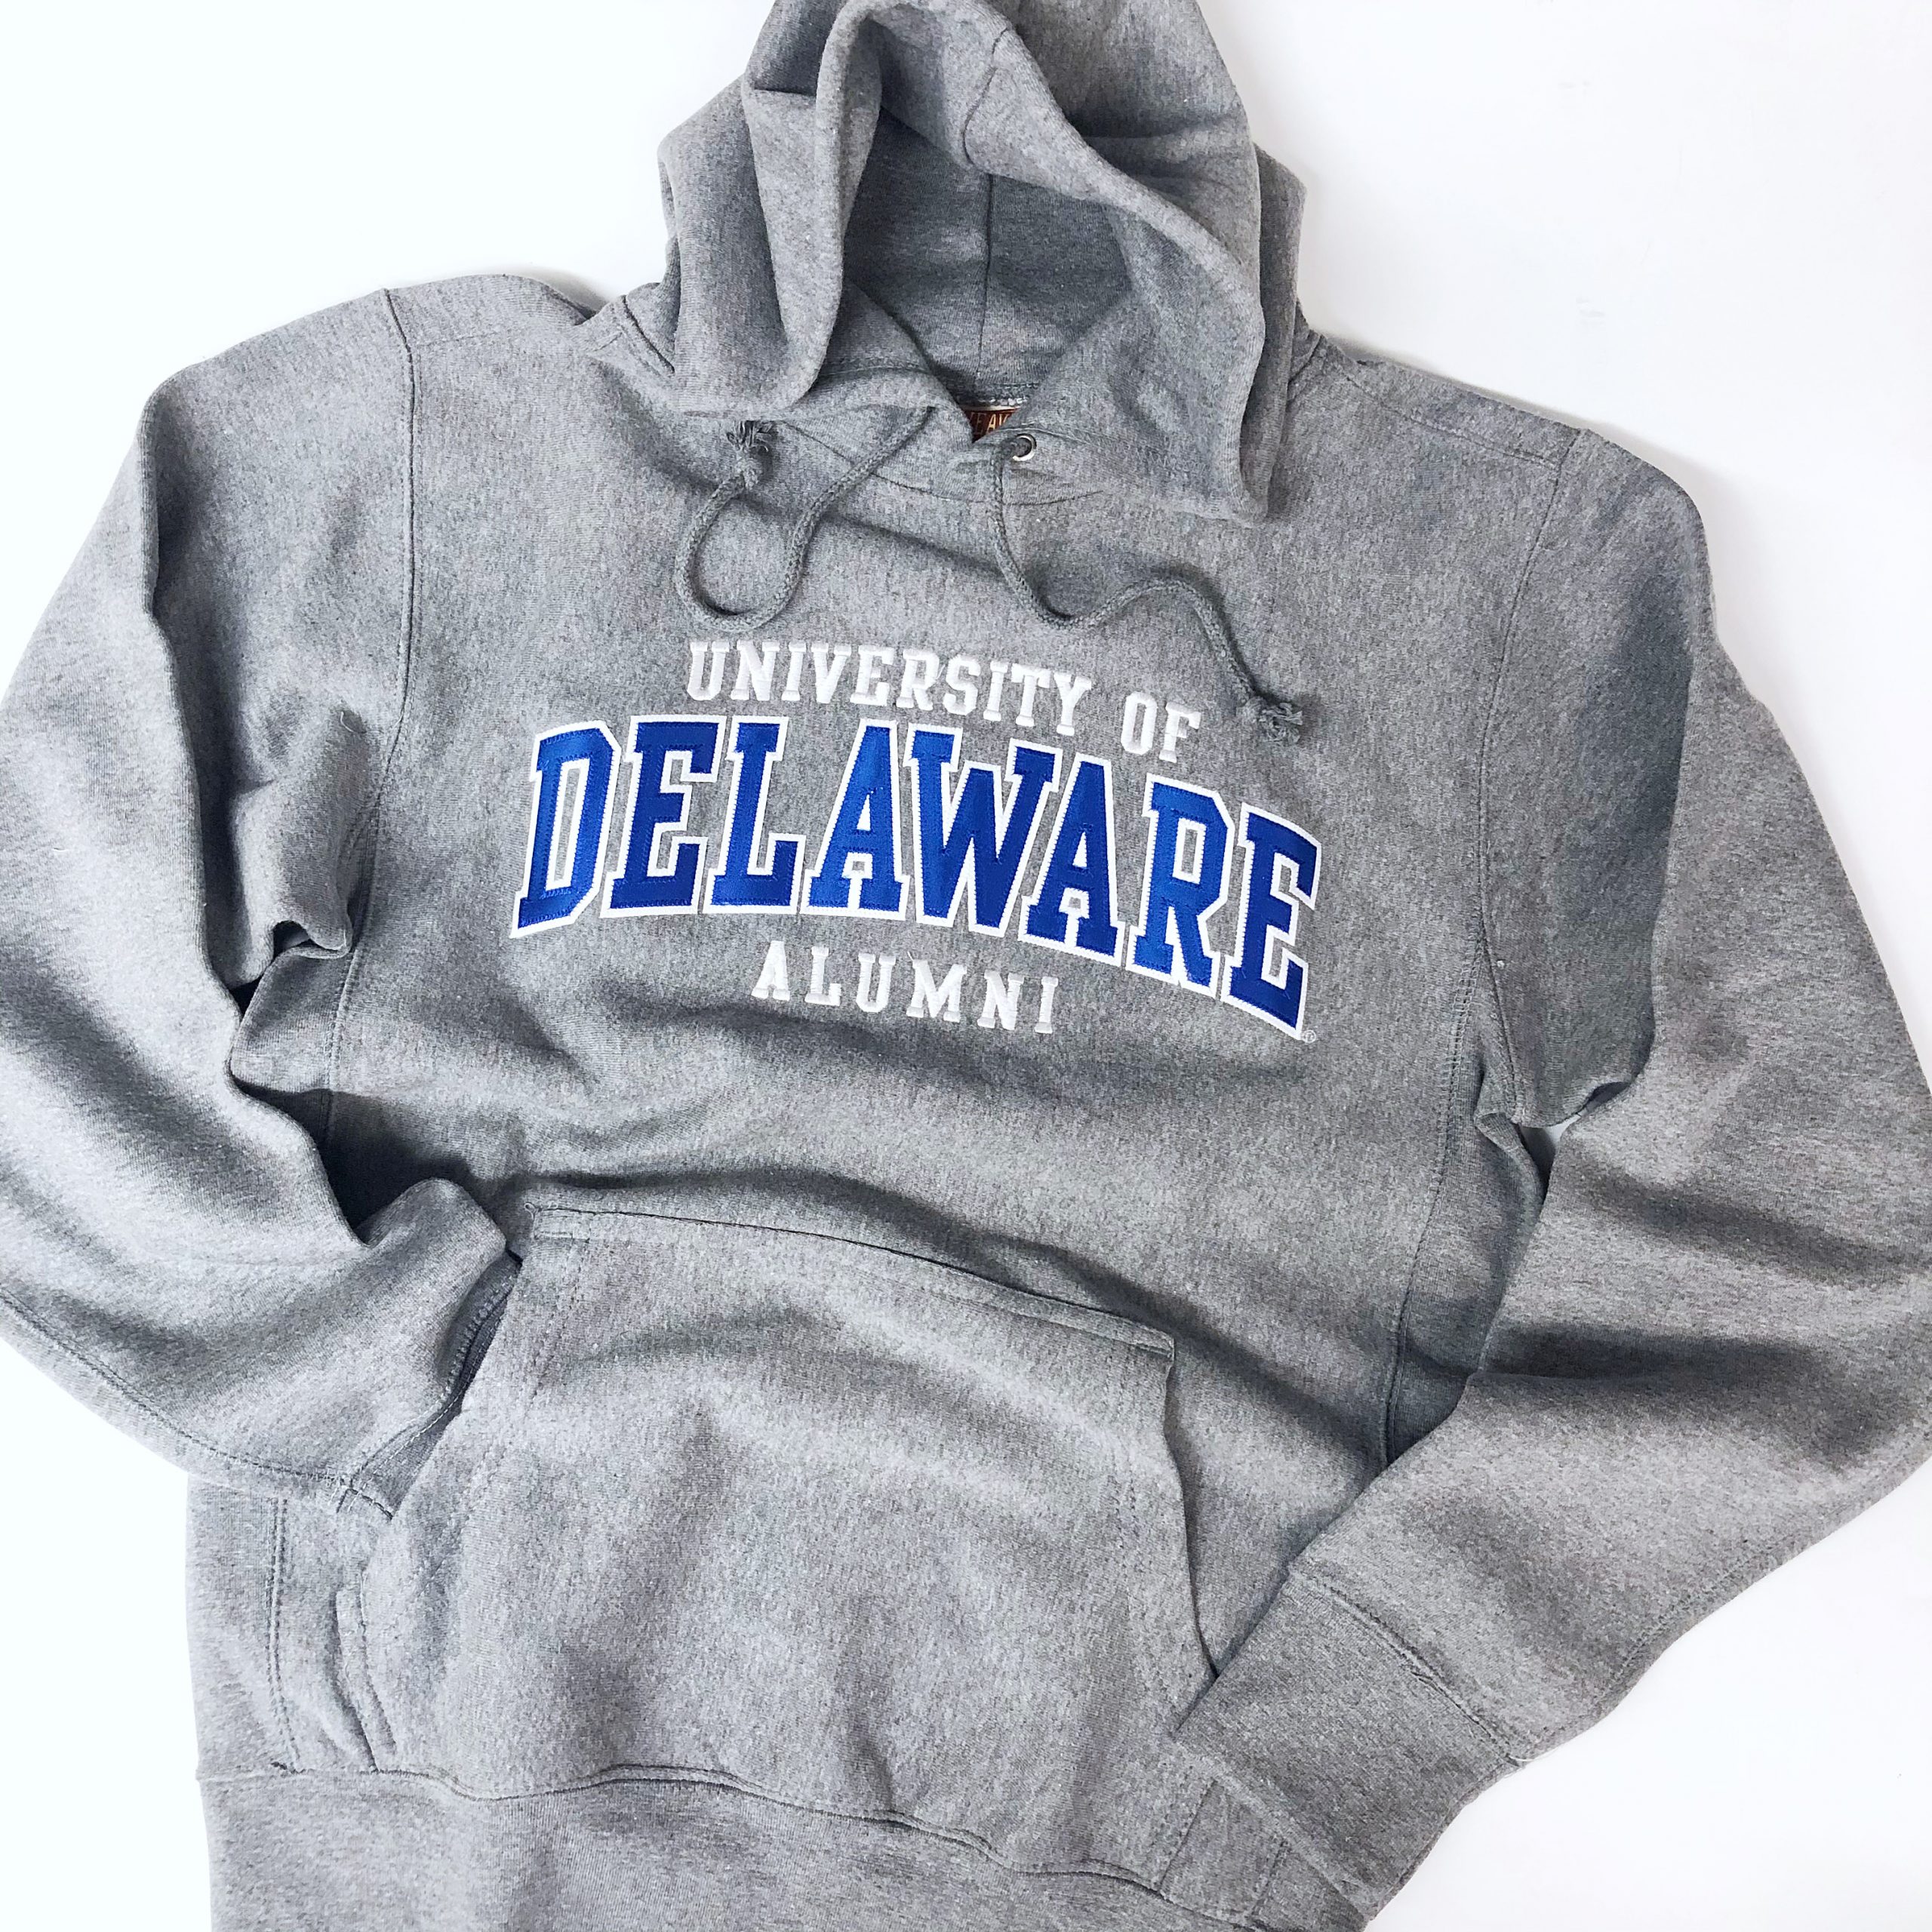 University of Delaware Alumni Embroidered Hoodie Sweatshirt